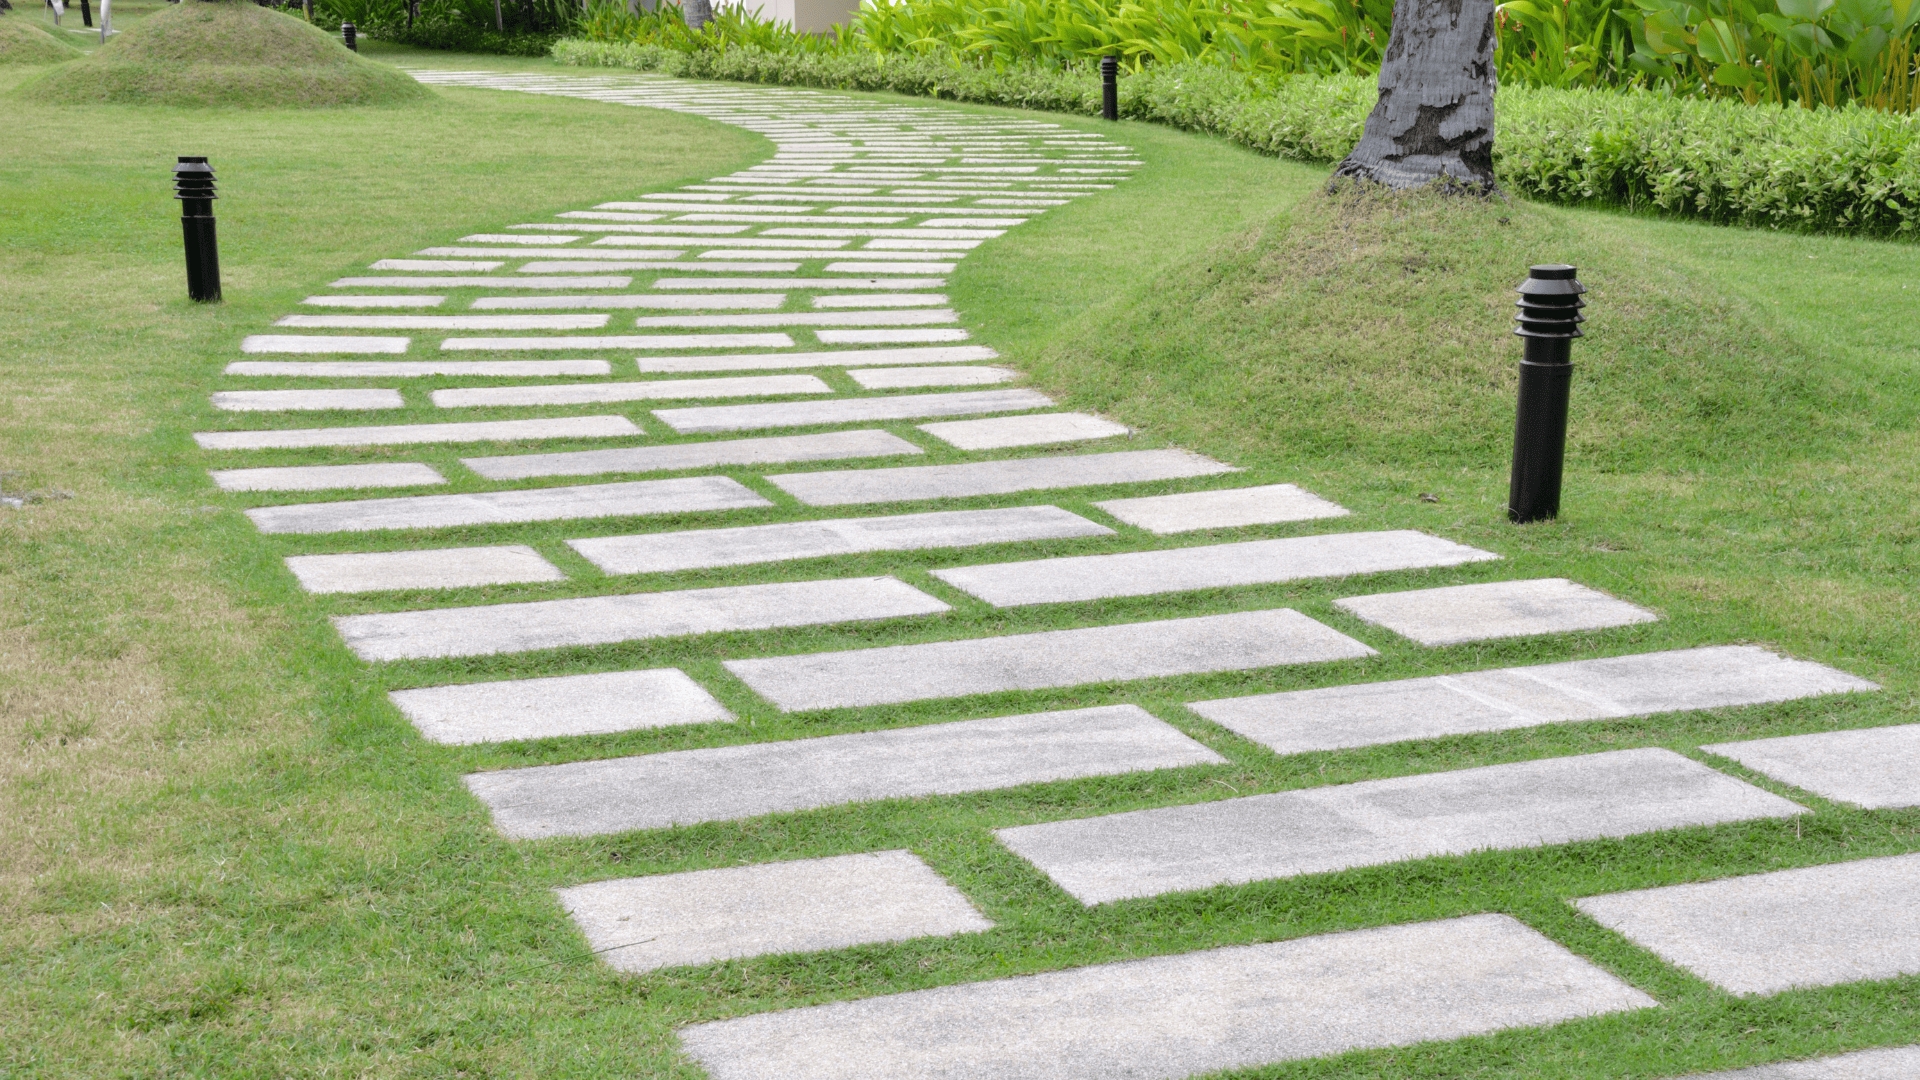 stone pathway through a grassy field